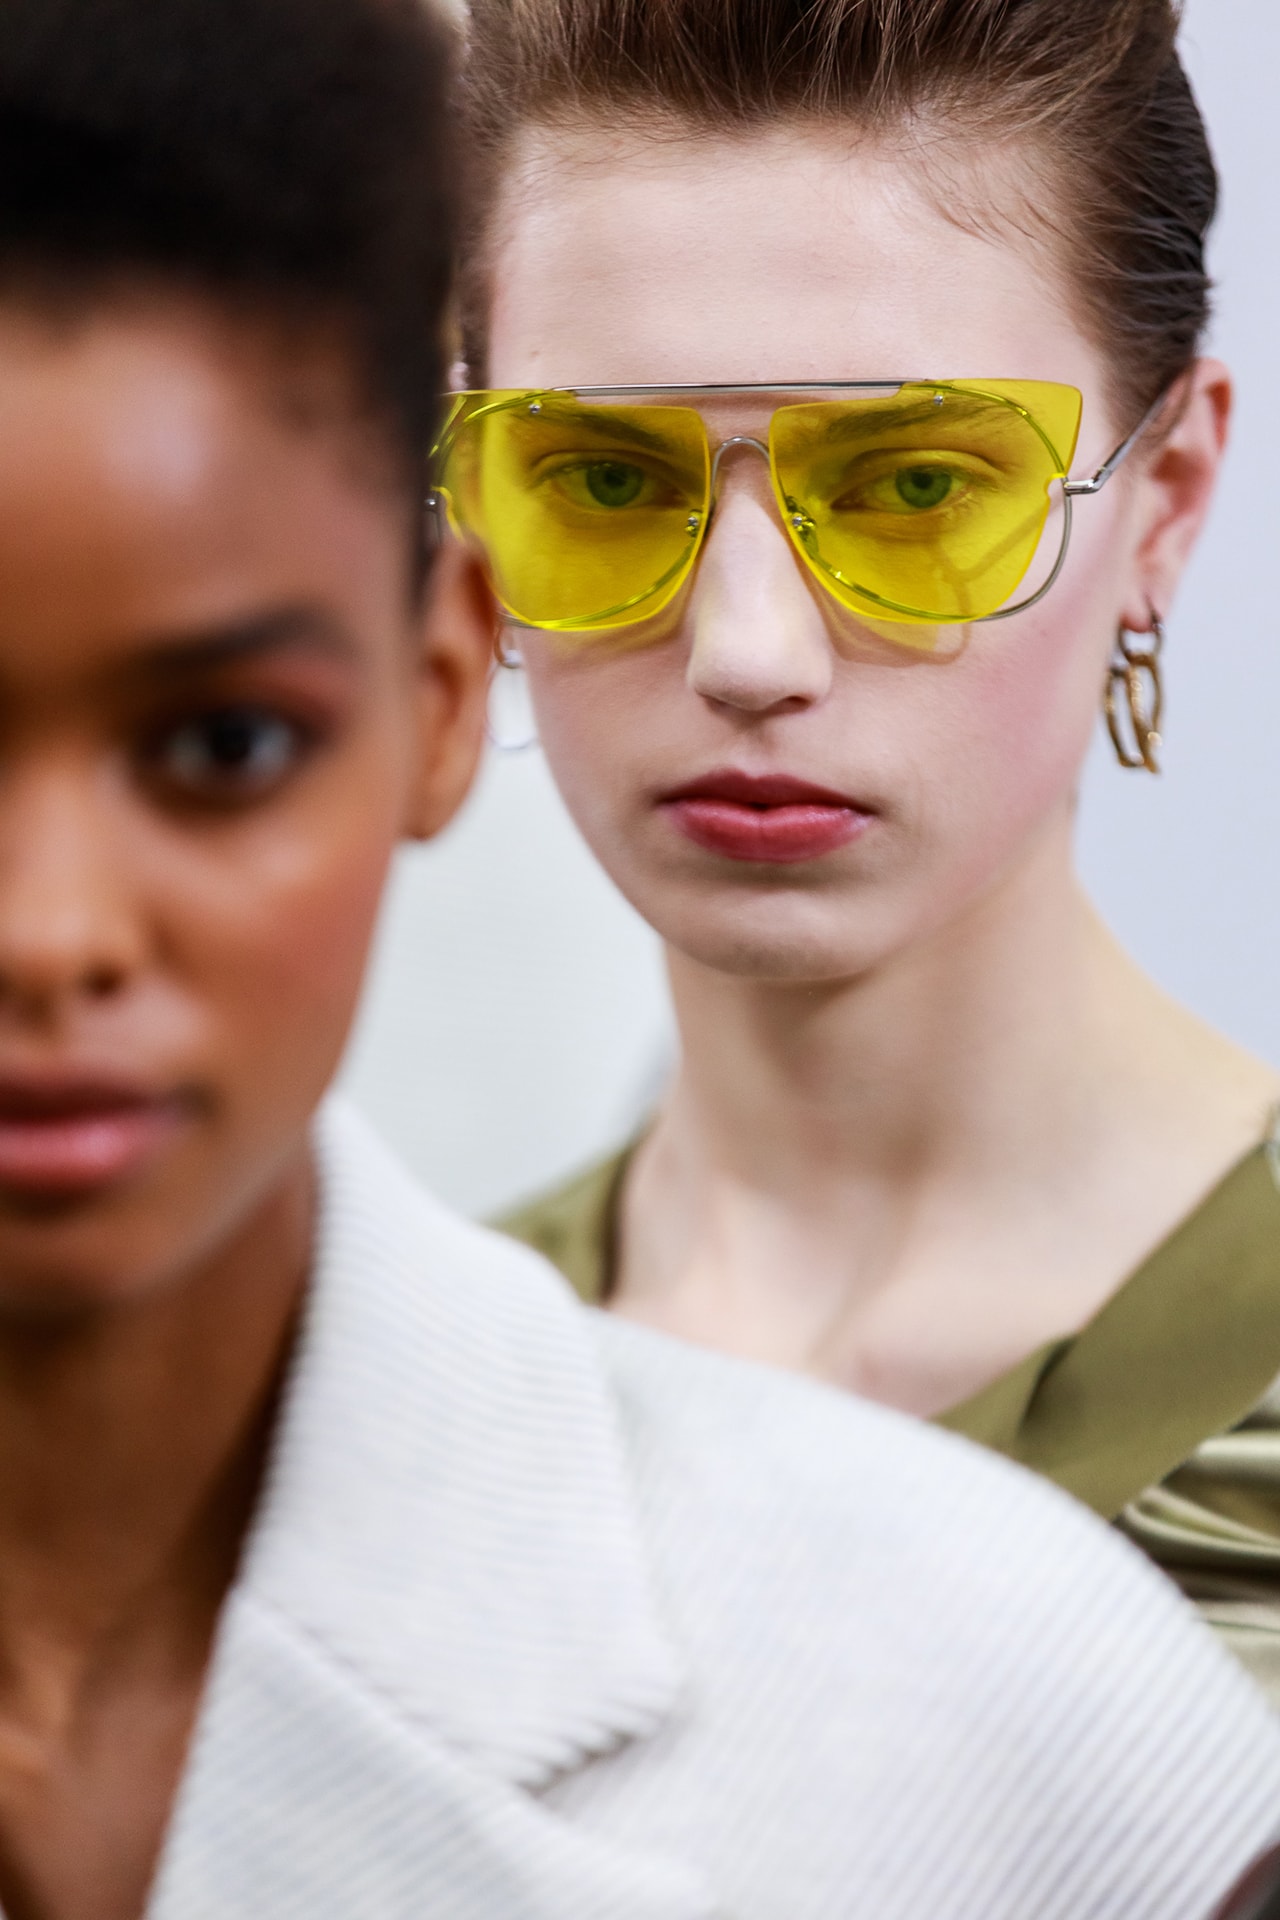 Acne Studios Fall Winter 2019 Show Backstage Paris Fashion Week Womenswear Johnny Johansson Coats Fur Bags Sunglasses Models